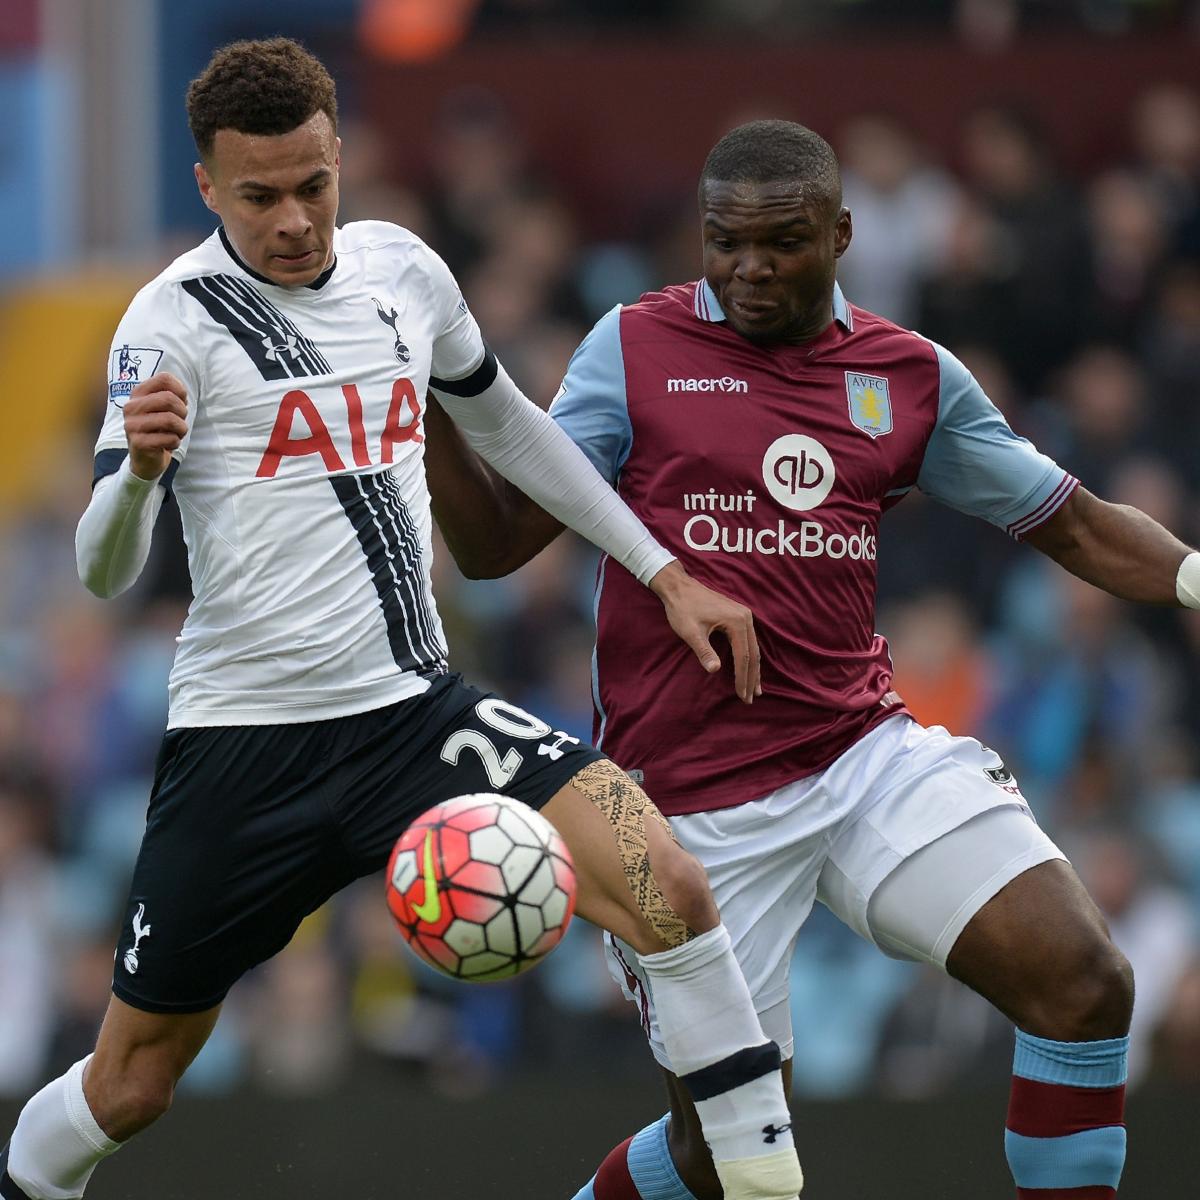 Aston Villa Vs Tottenham Live Score Highlights From Premier League Bleacher Report Latest News Videos And Highlights